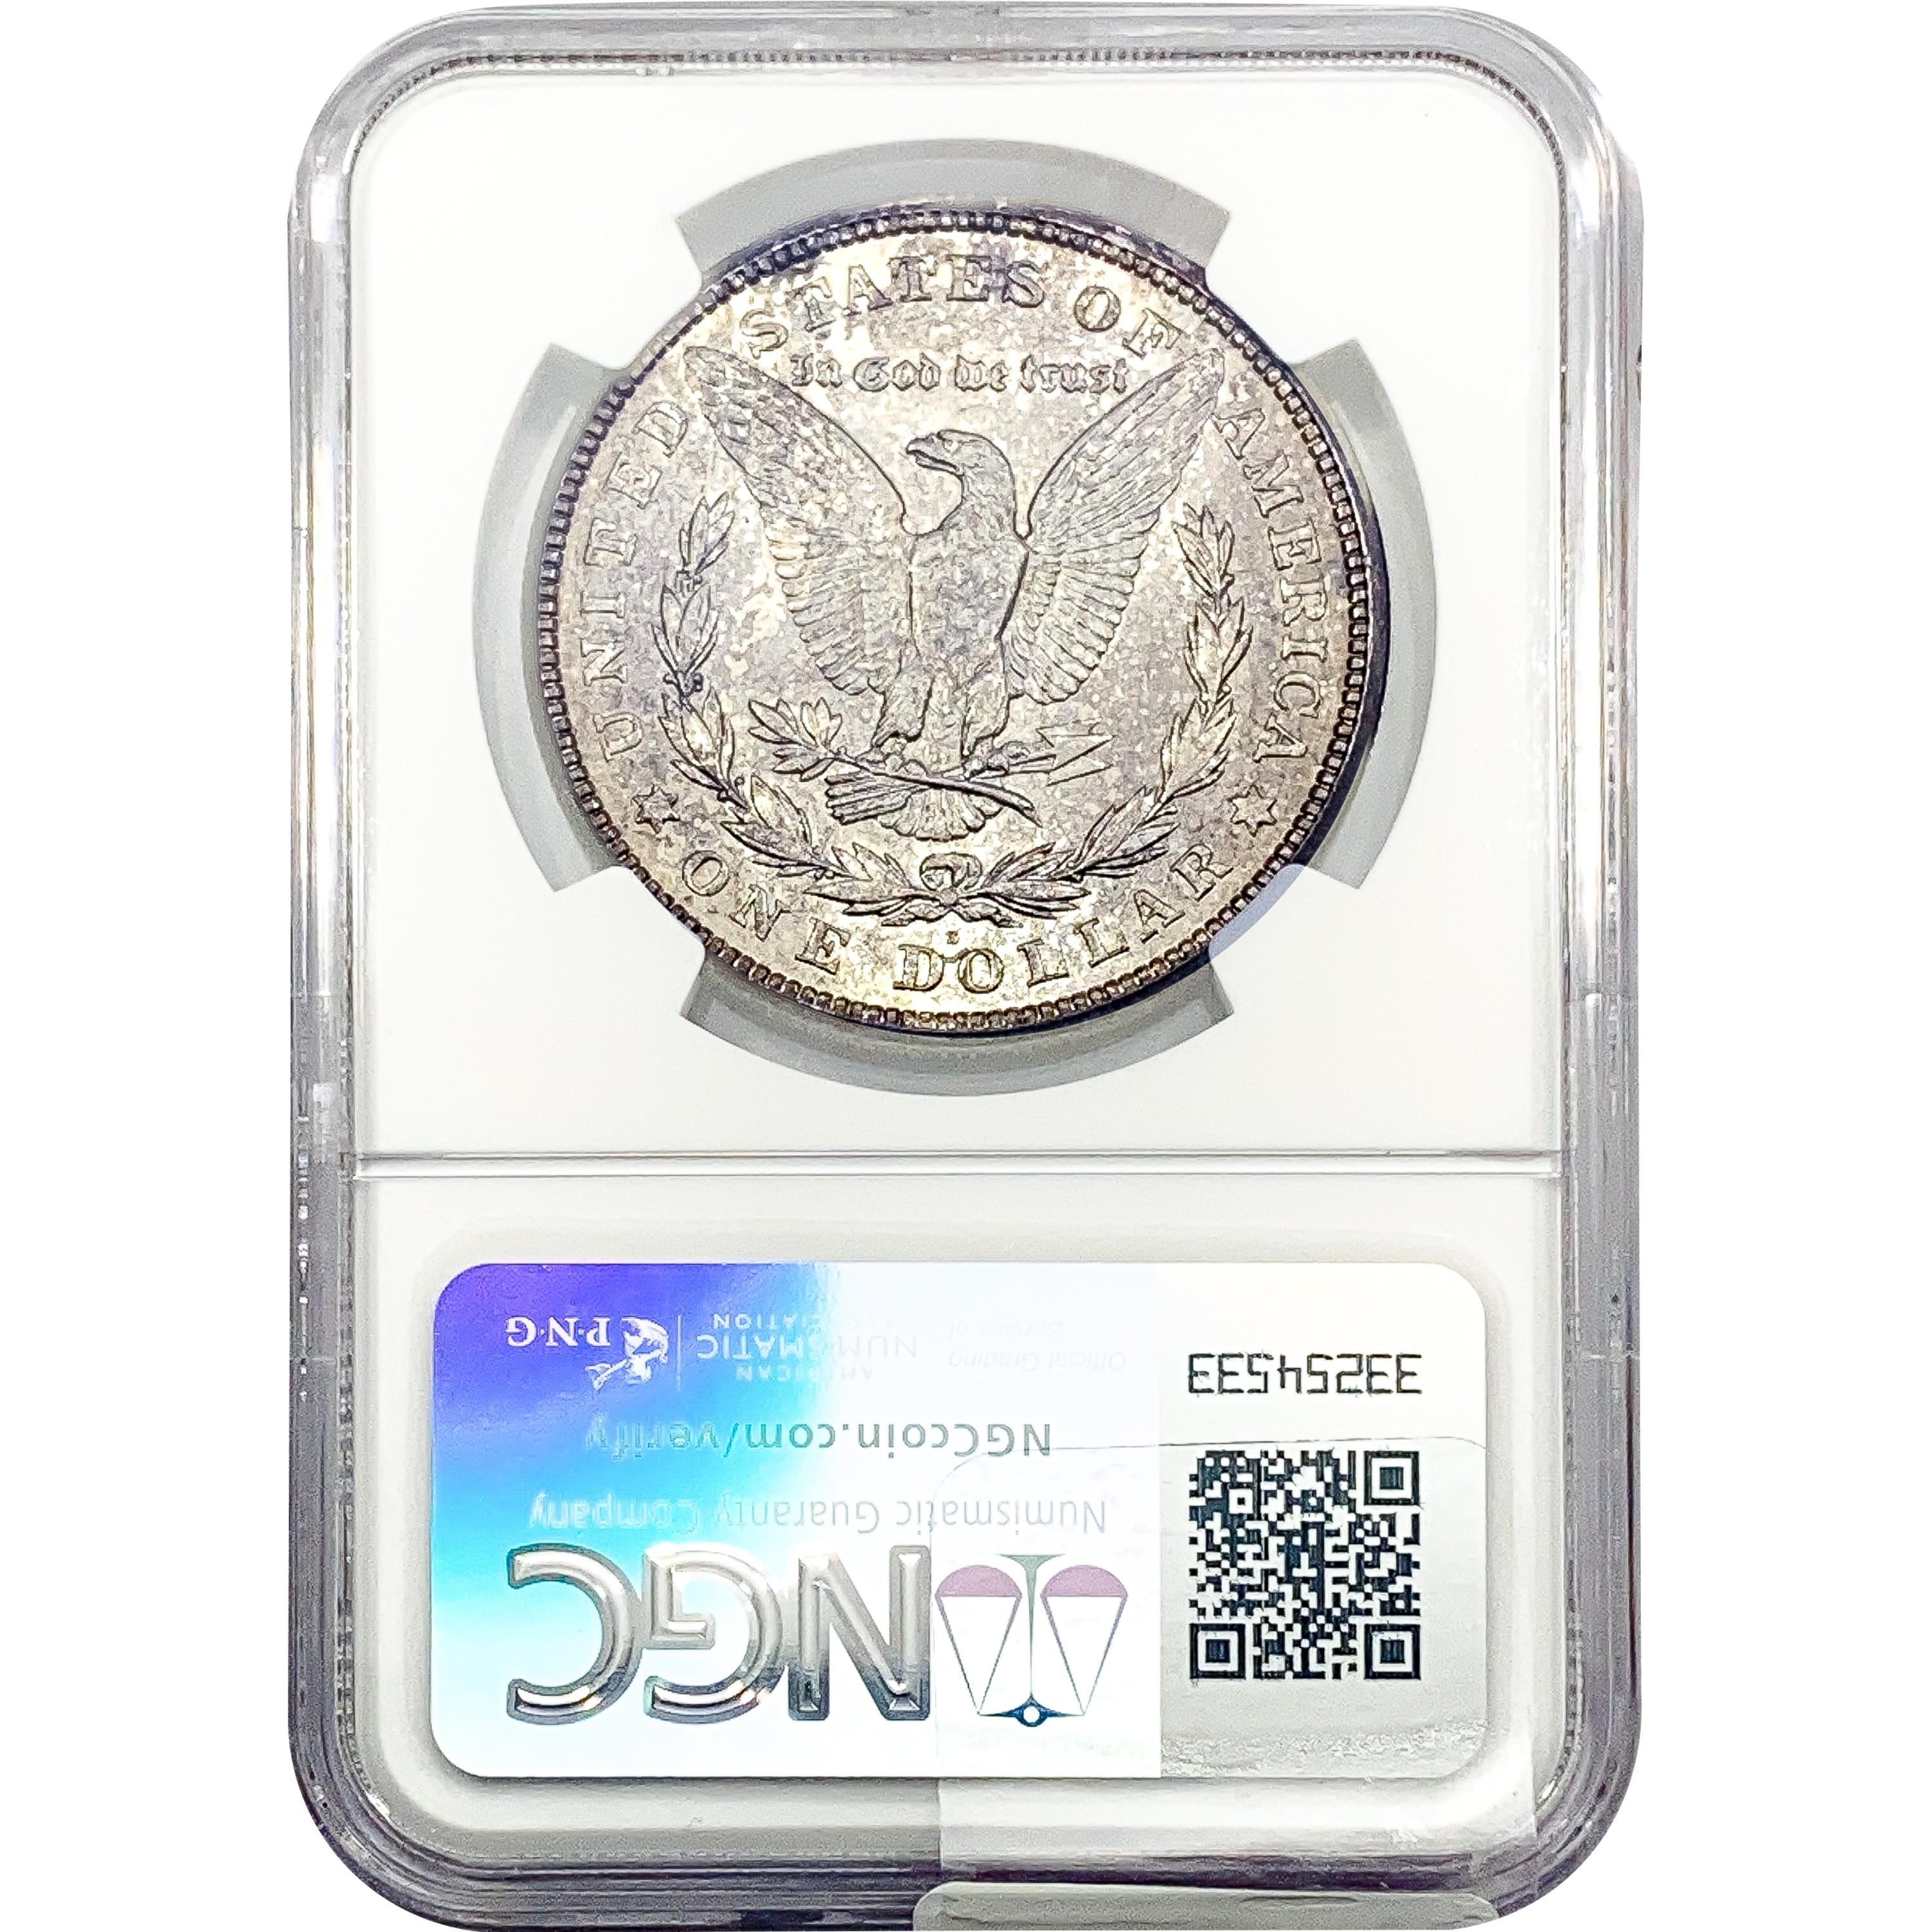 1921-S Morgan Silver Dollar NGC MS64